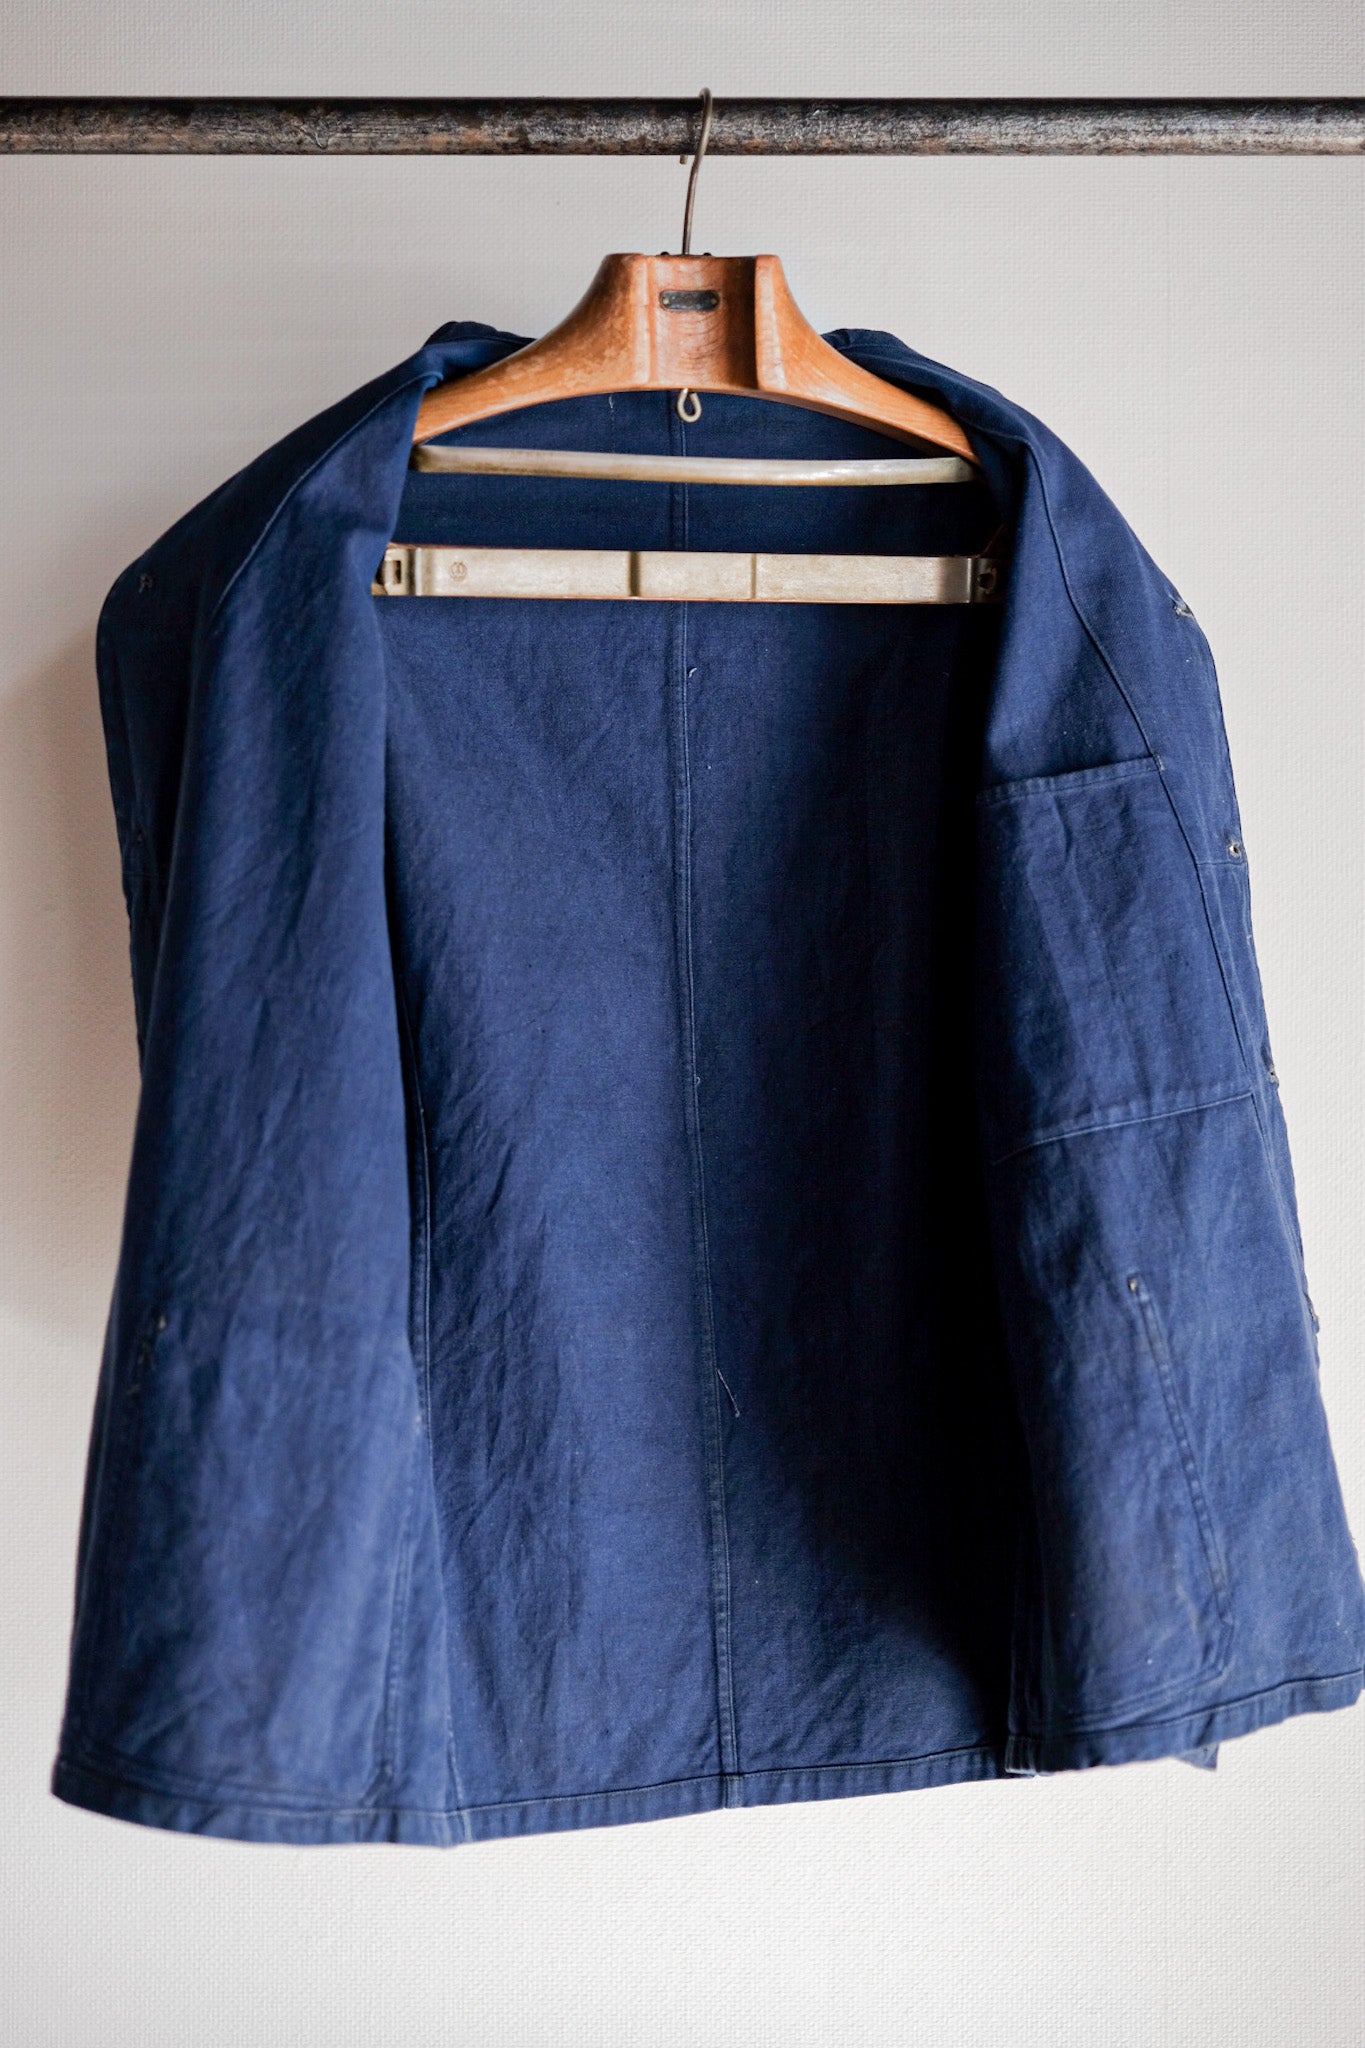 [~ 40's] French Navy Indigo Cotton Twill Chore Jacket